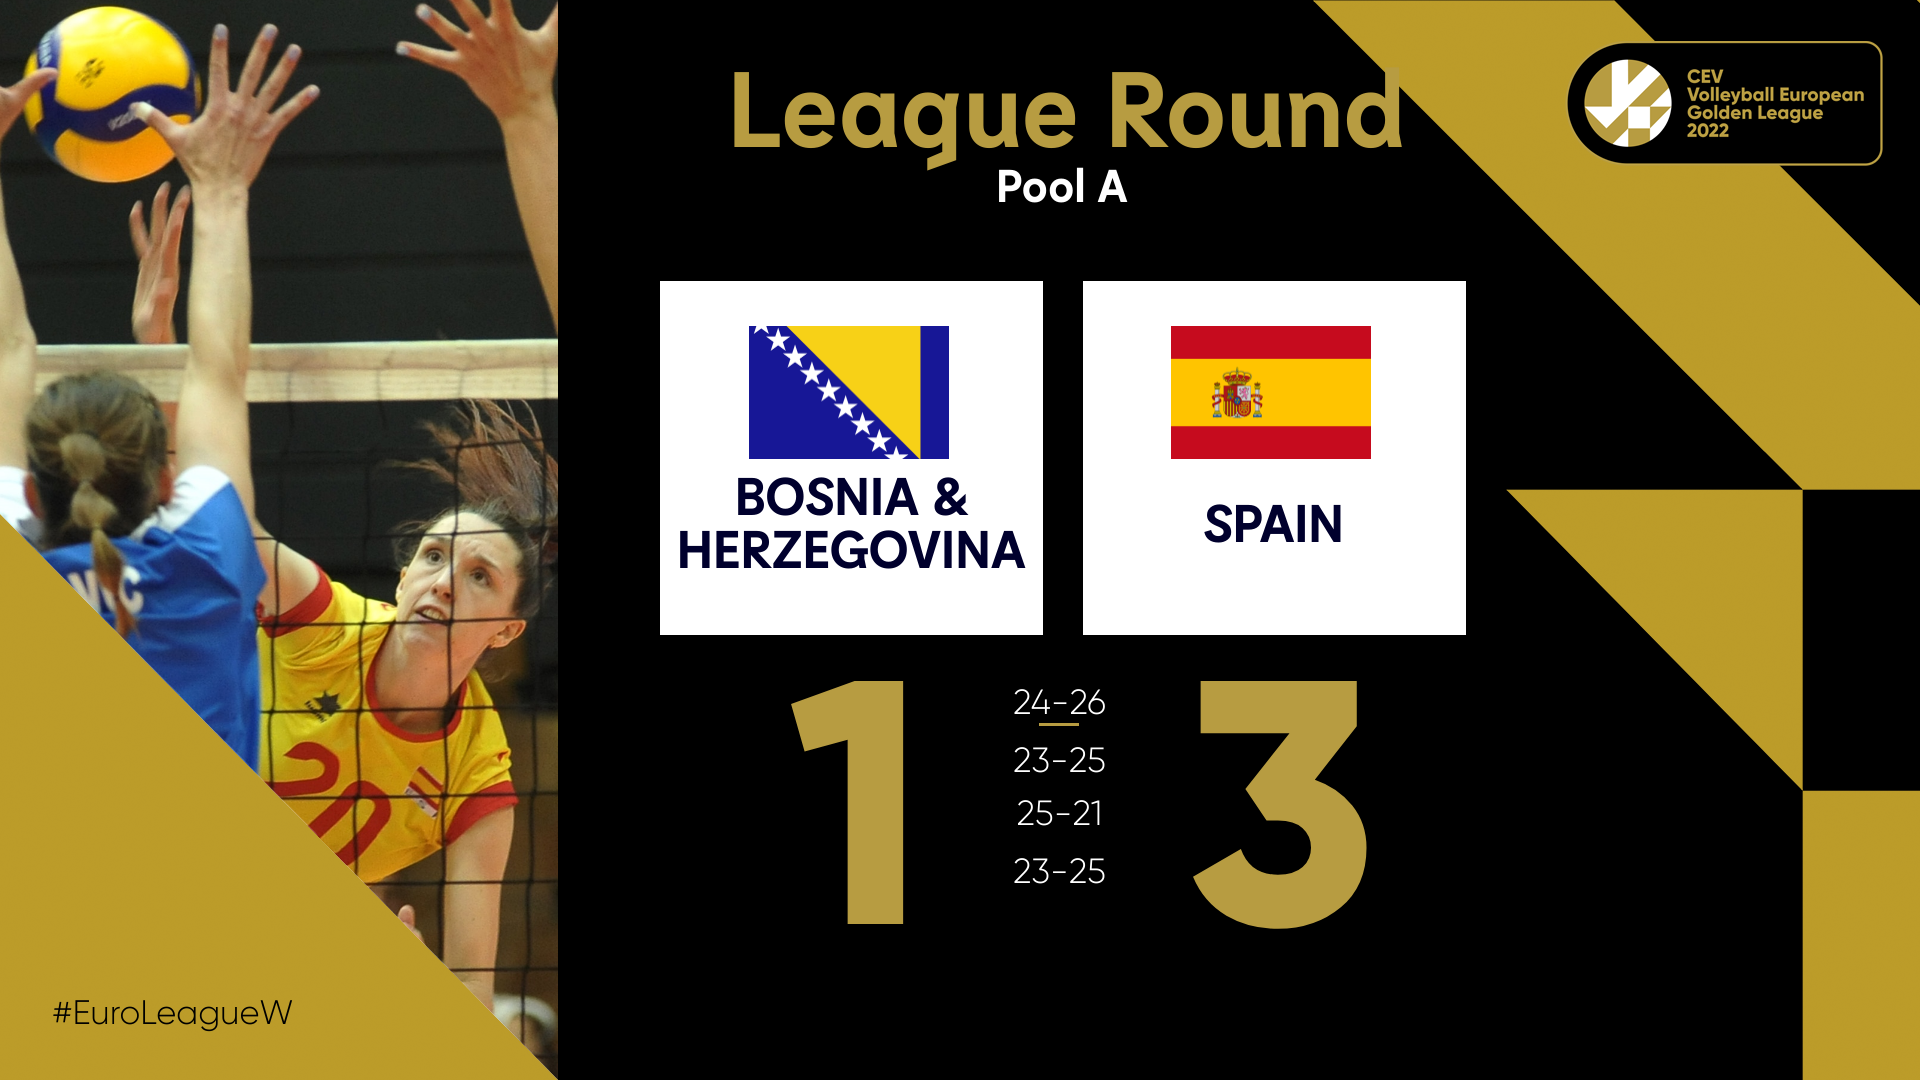 Grbavica hammers 23 towards Croatias first win, Spain upset Golden #EuroLeagueW rookies CEV